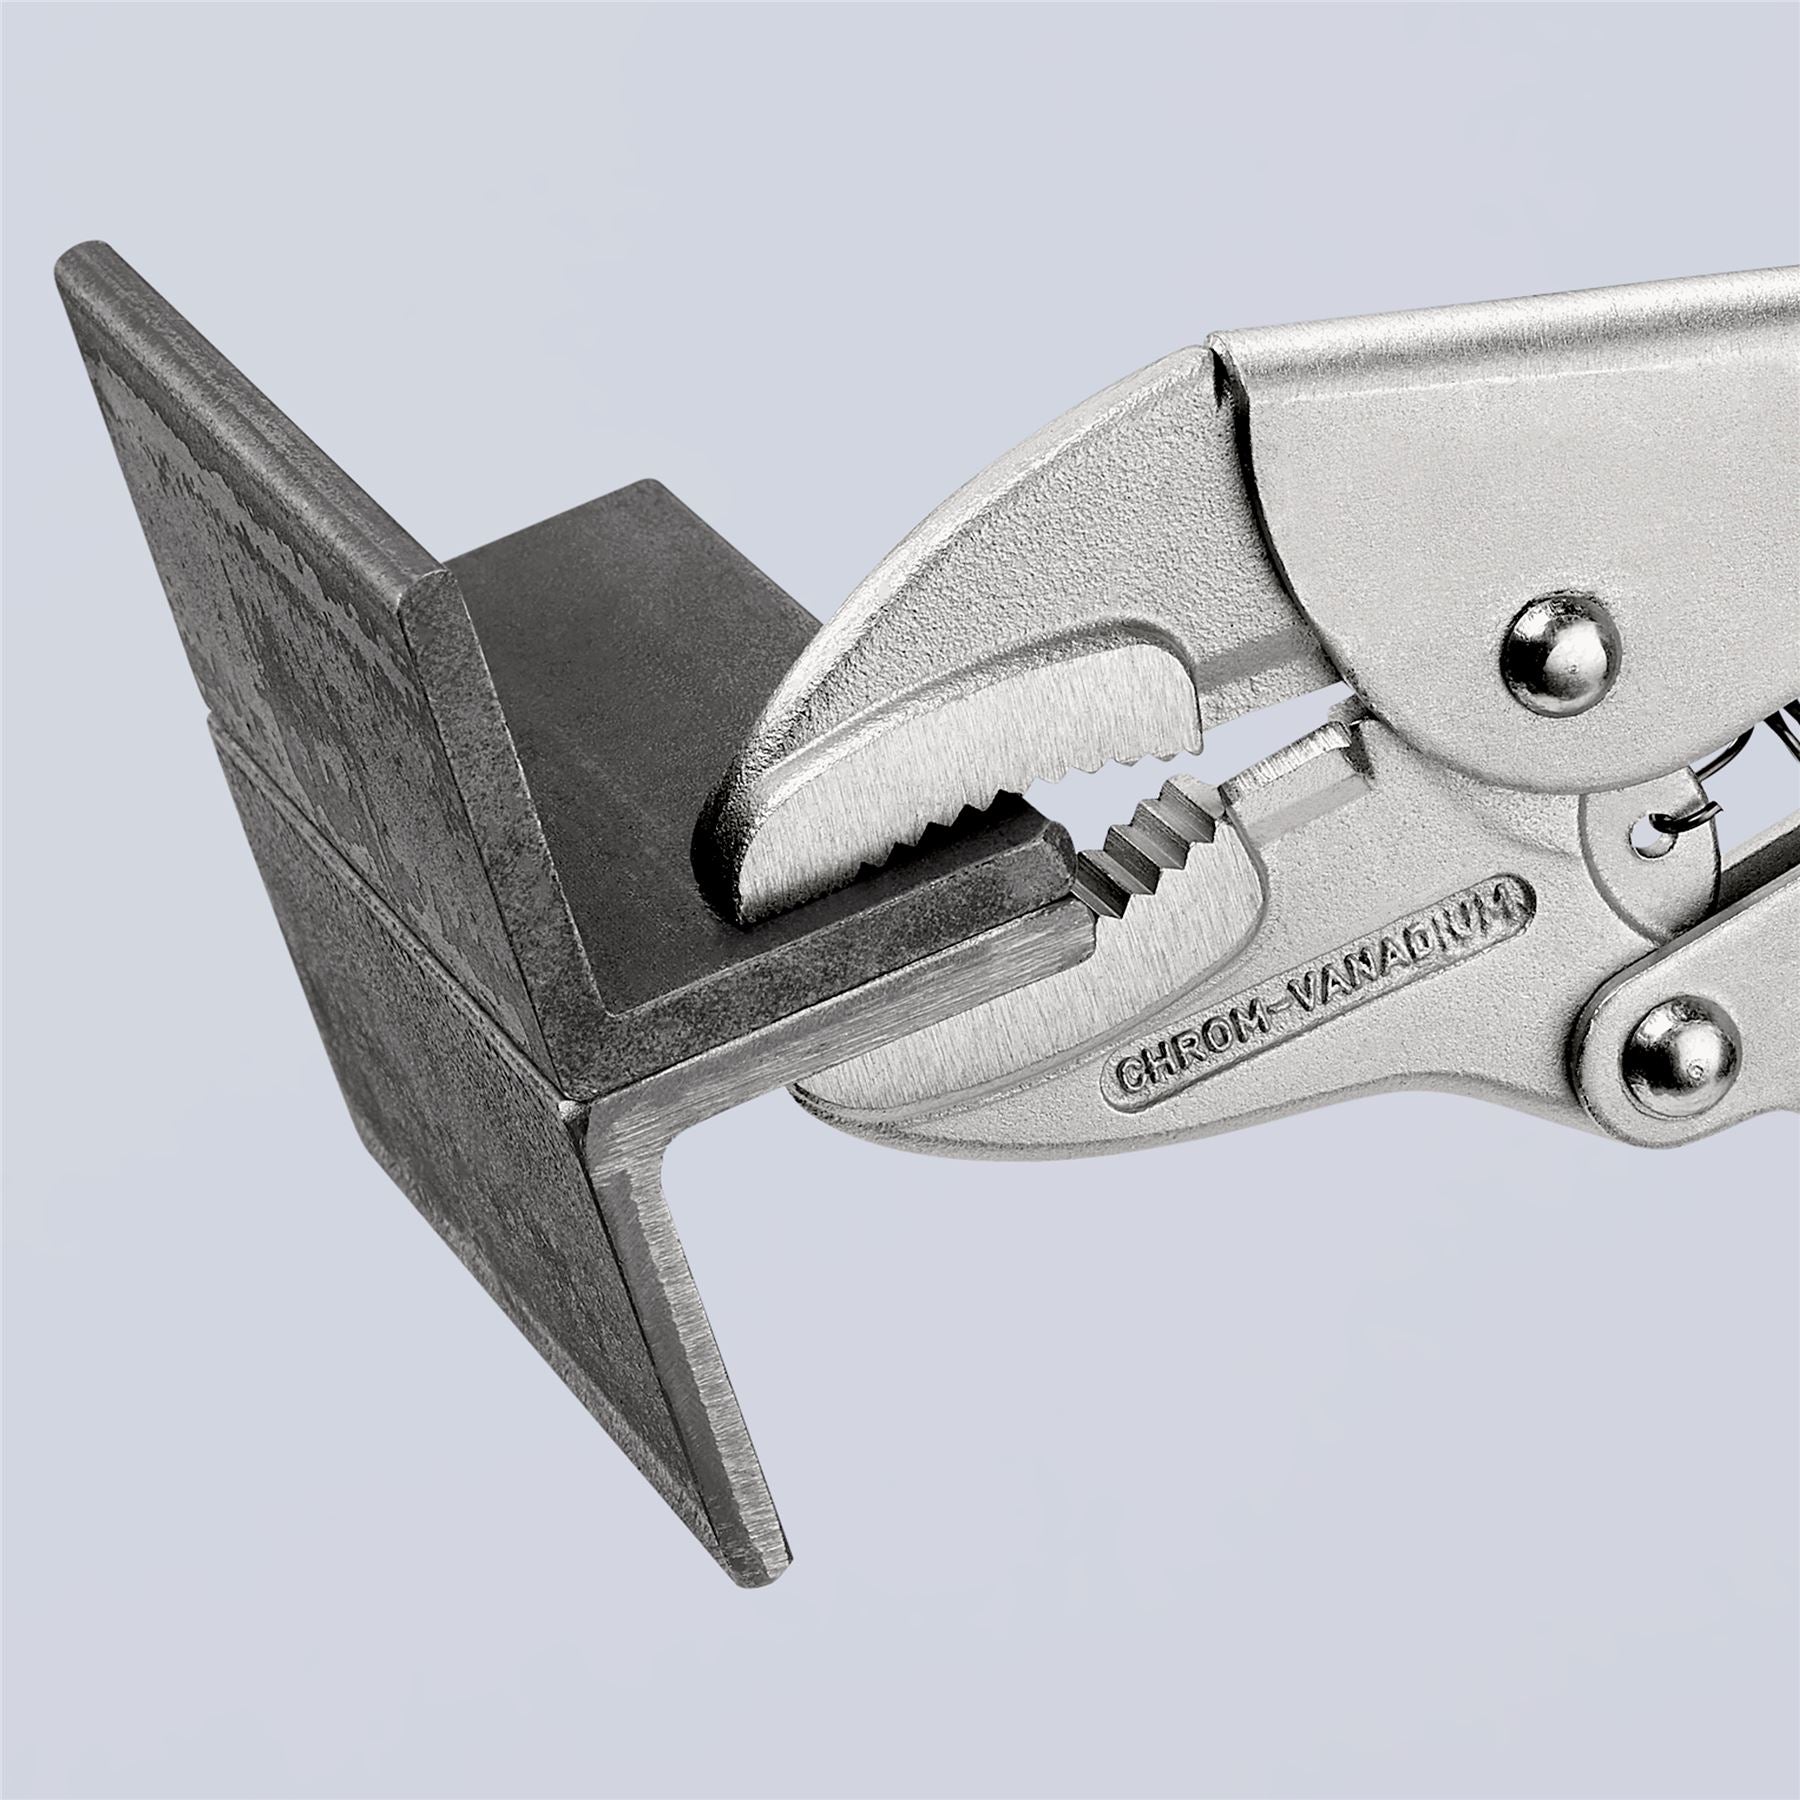 KNIPEX Grip Locking Pliers Mole Grips 250mm Galvanised 41 04 250 SB